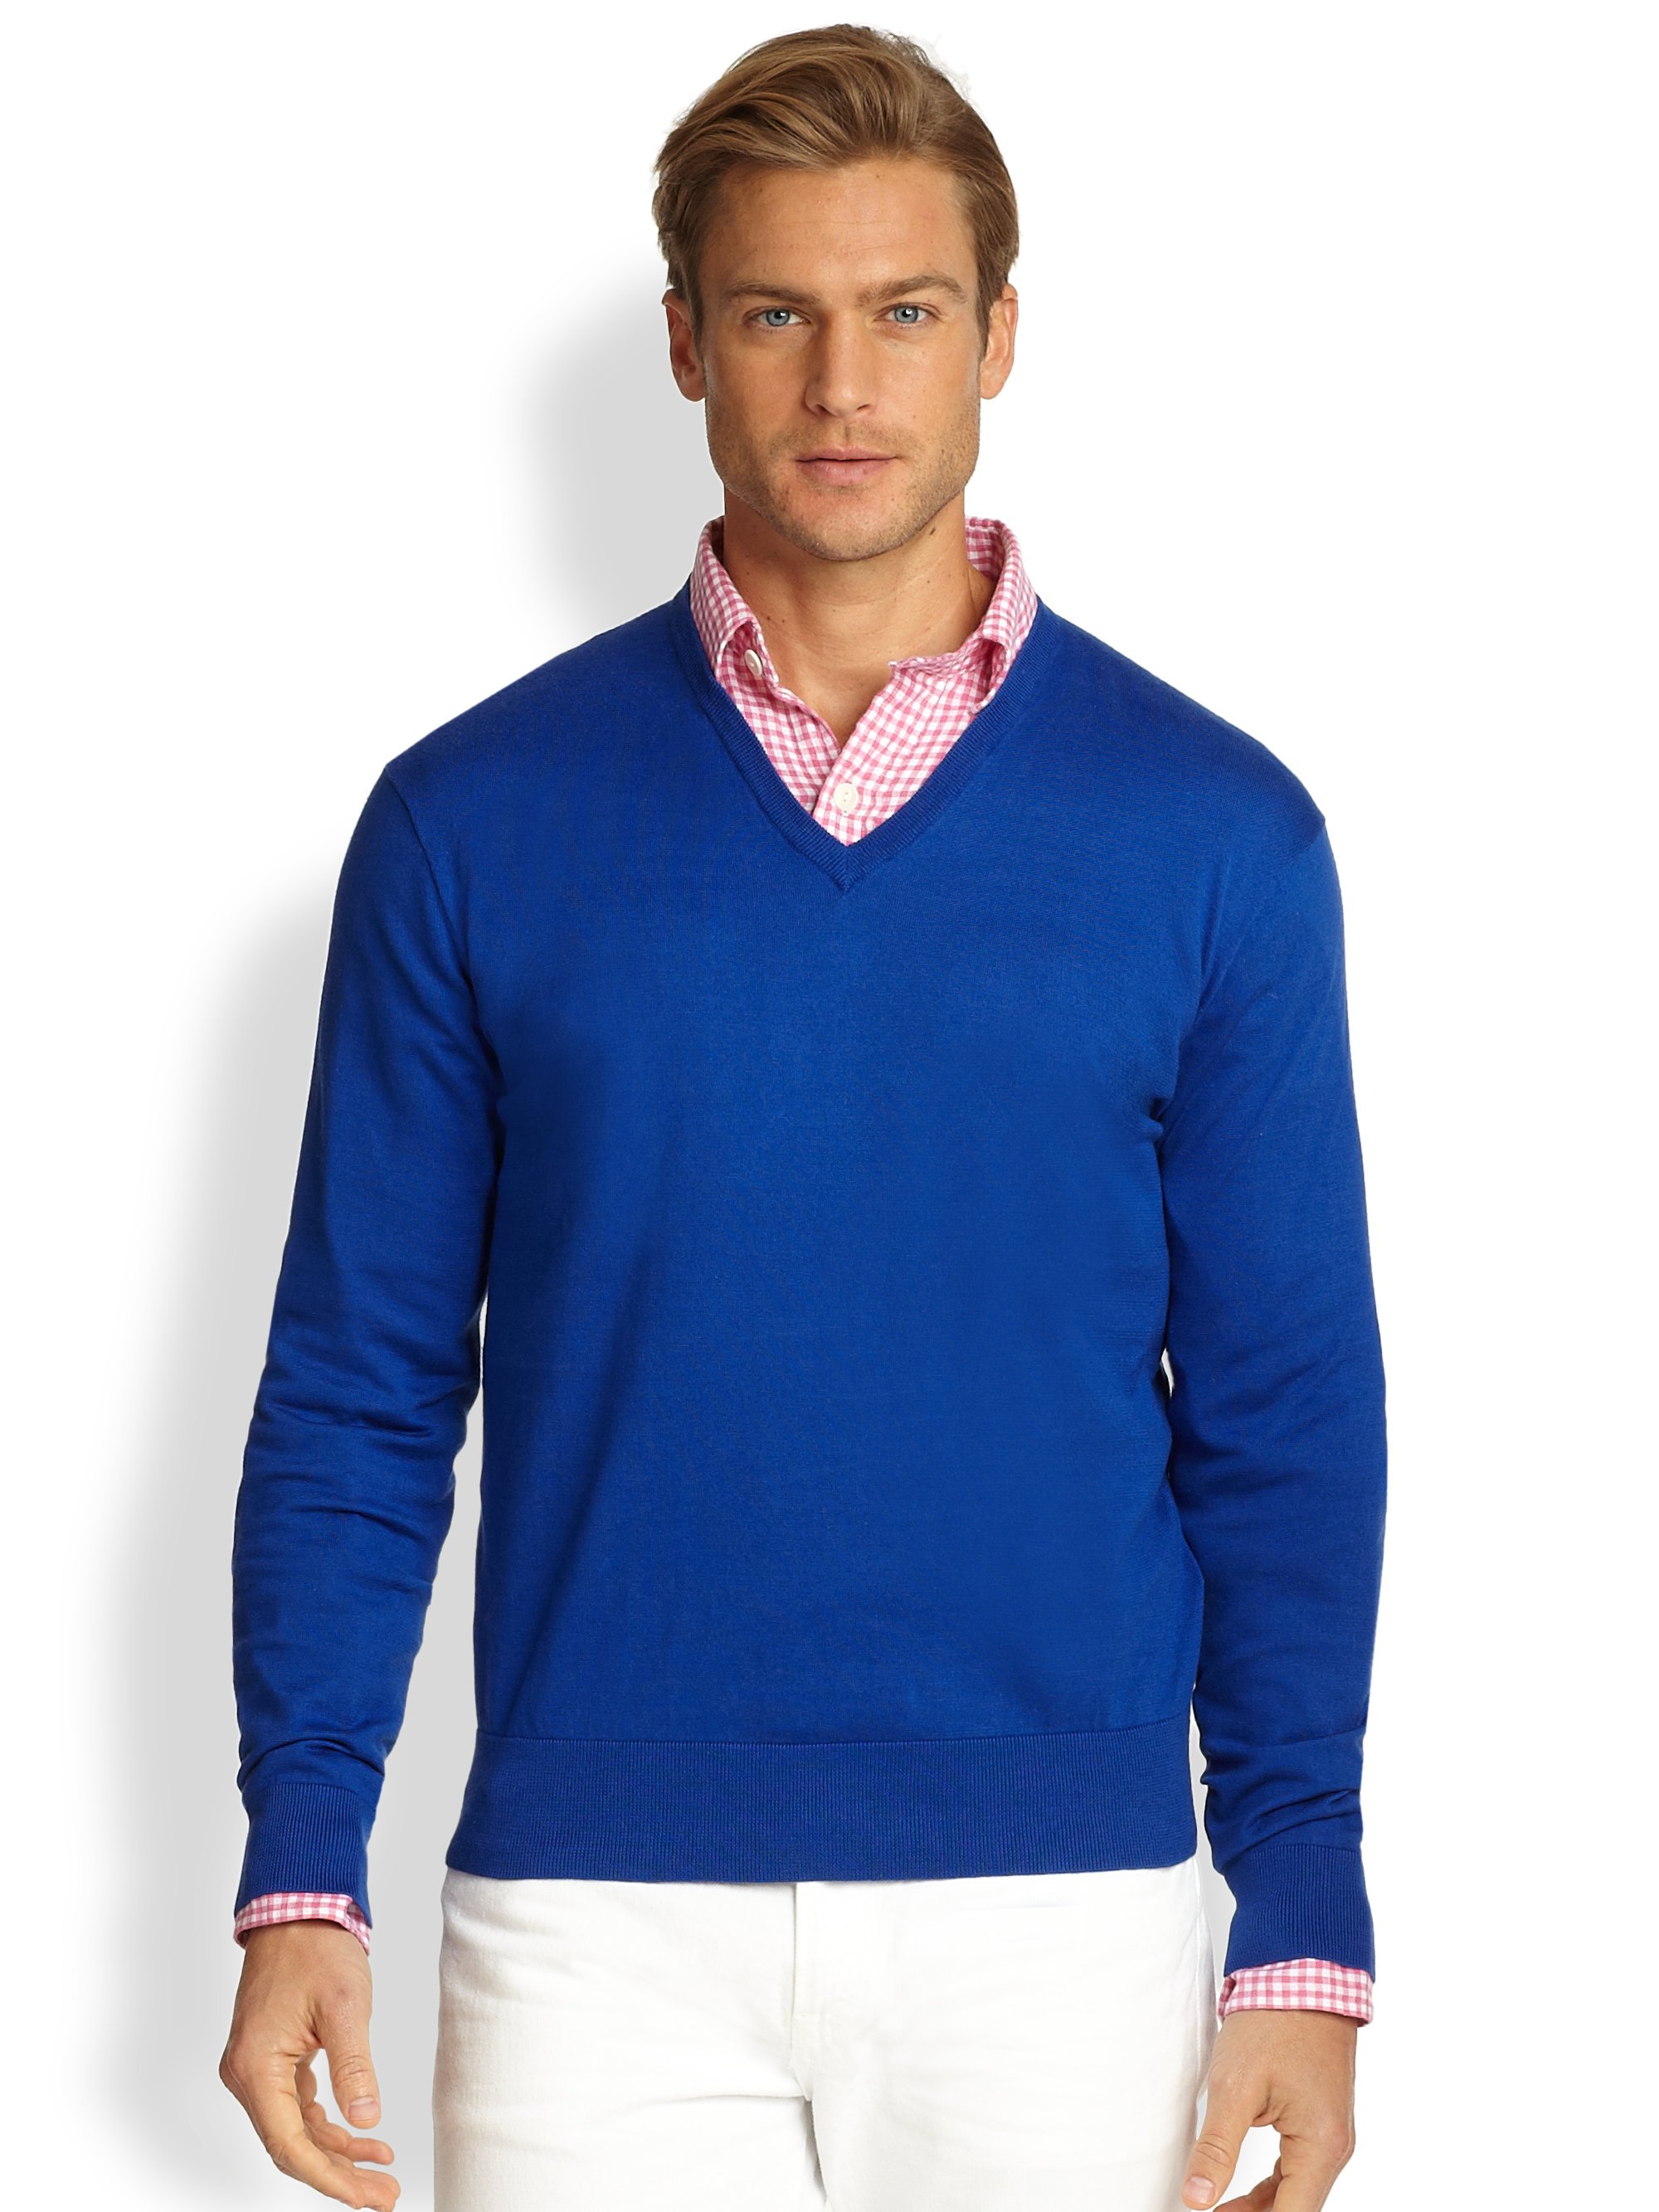 Polo Ralph Lauren Cotton V-neck Sweater in Blue for Men - Lyst